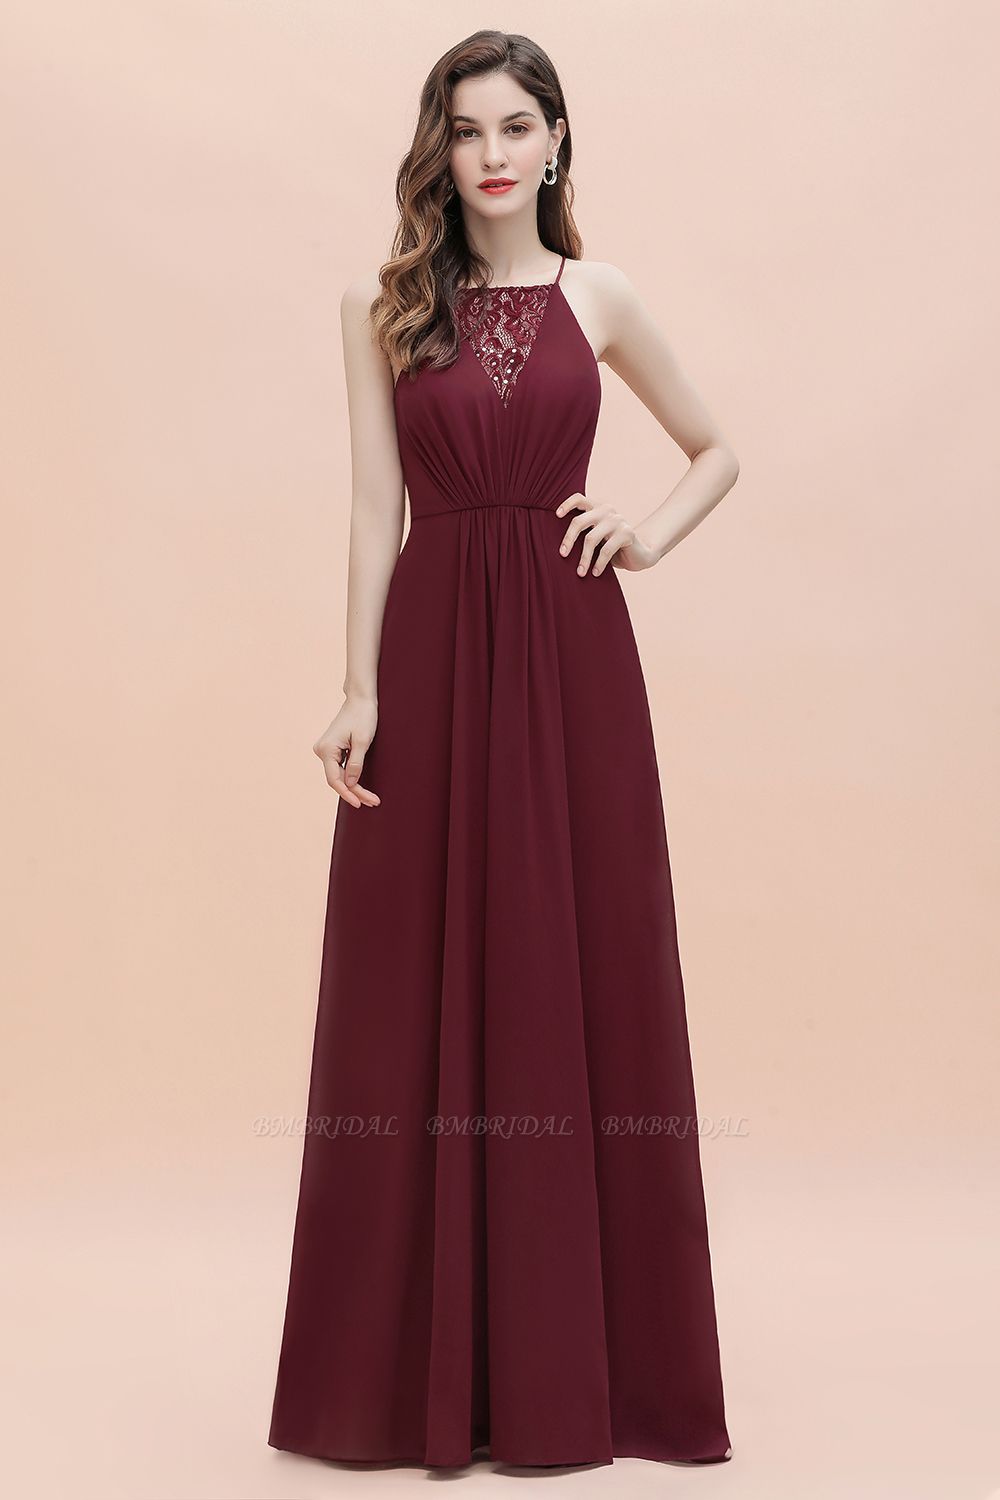 BMbridal Sexy V-neck Burgundy Chiffon Bridesmaid Dress Spaghetti Straps Lace Sequins Evening Dress